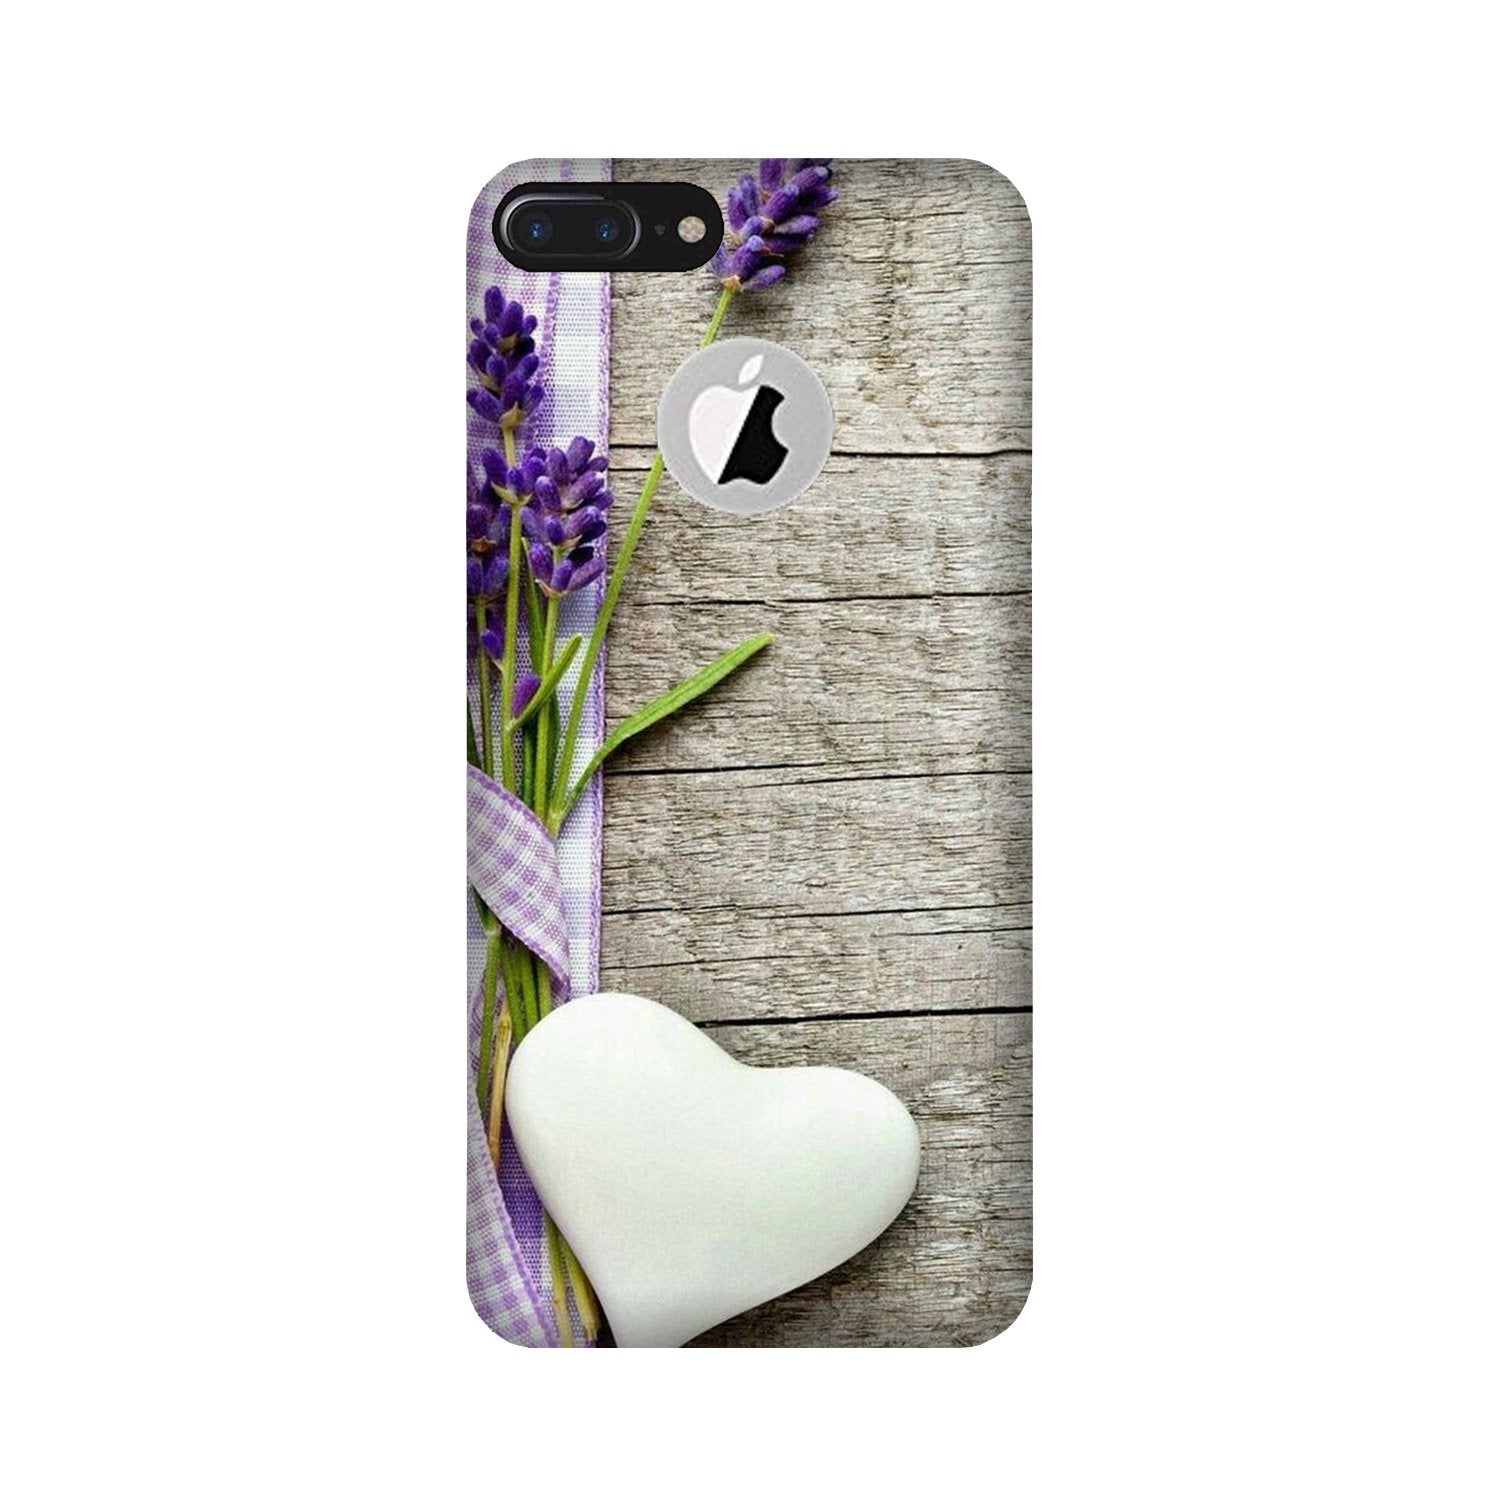 White Heart Case for iPhone 7 Plus logo cut (Design No. 298)